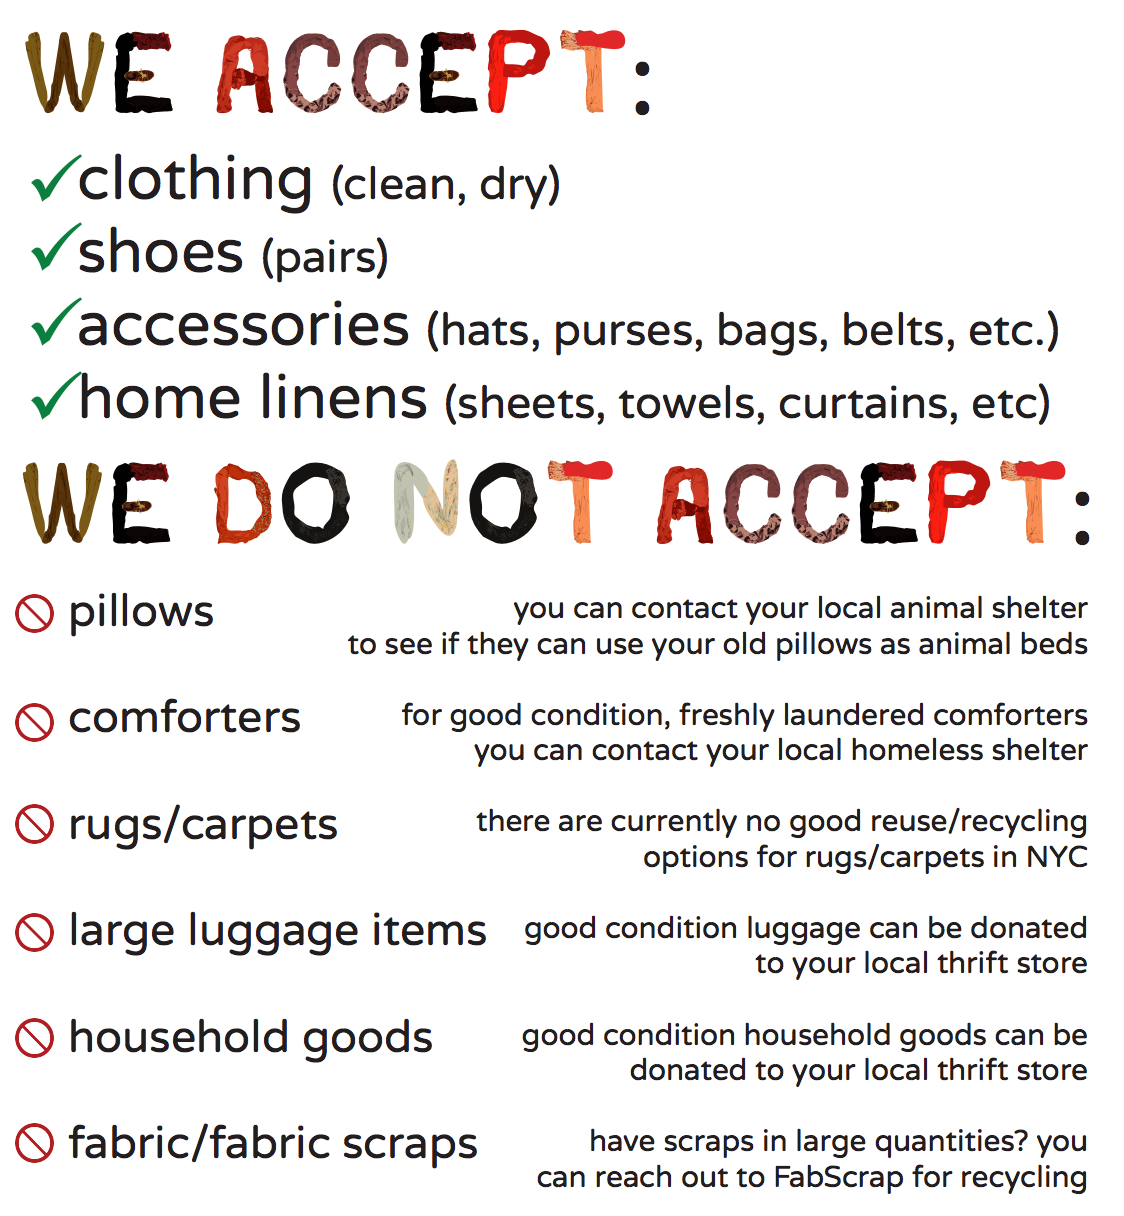 we accept - we do not accept